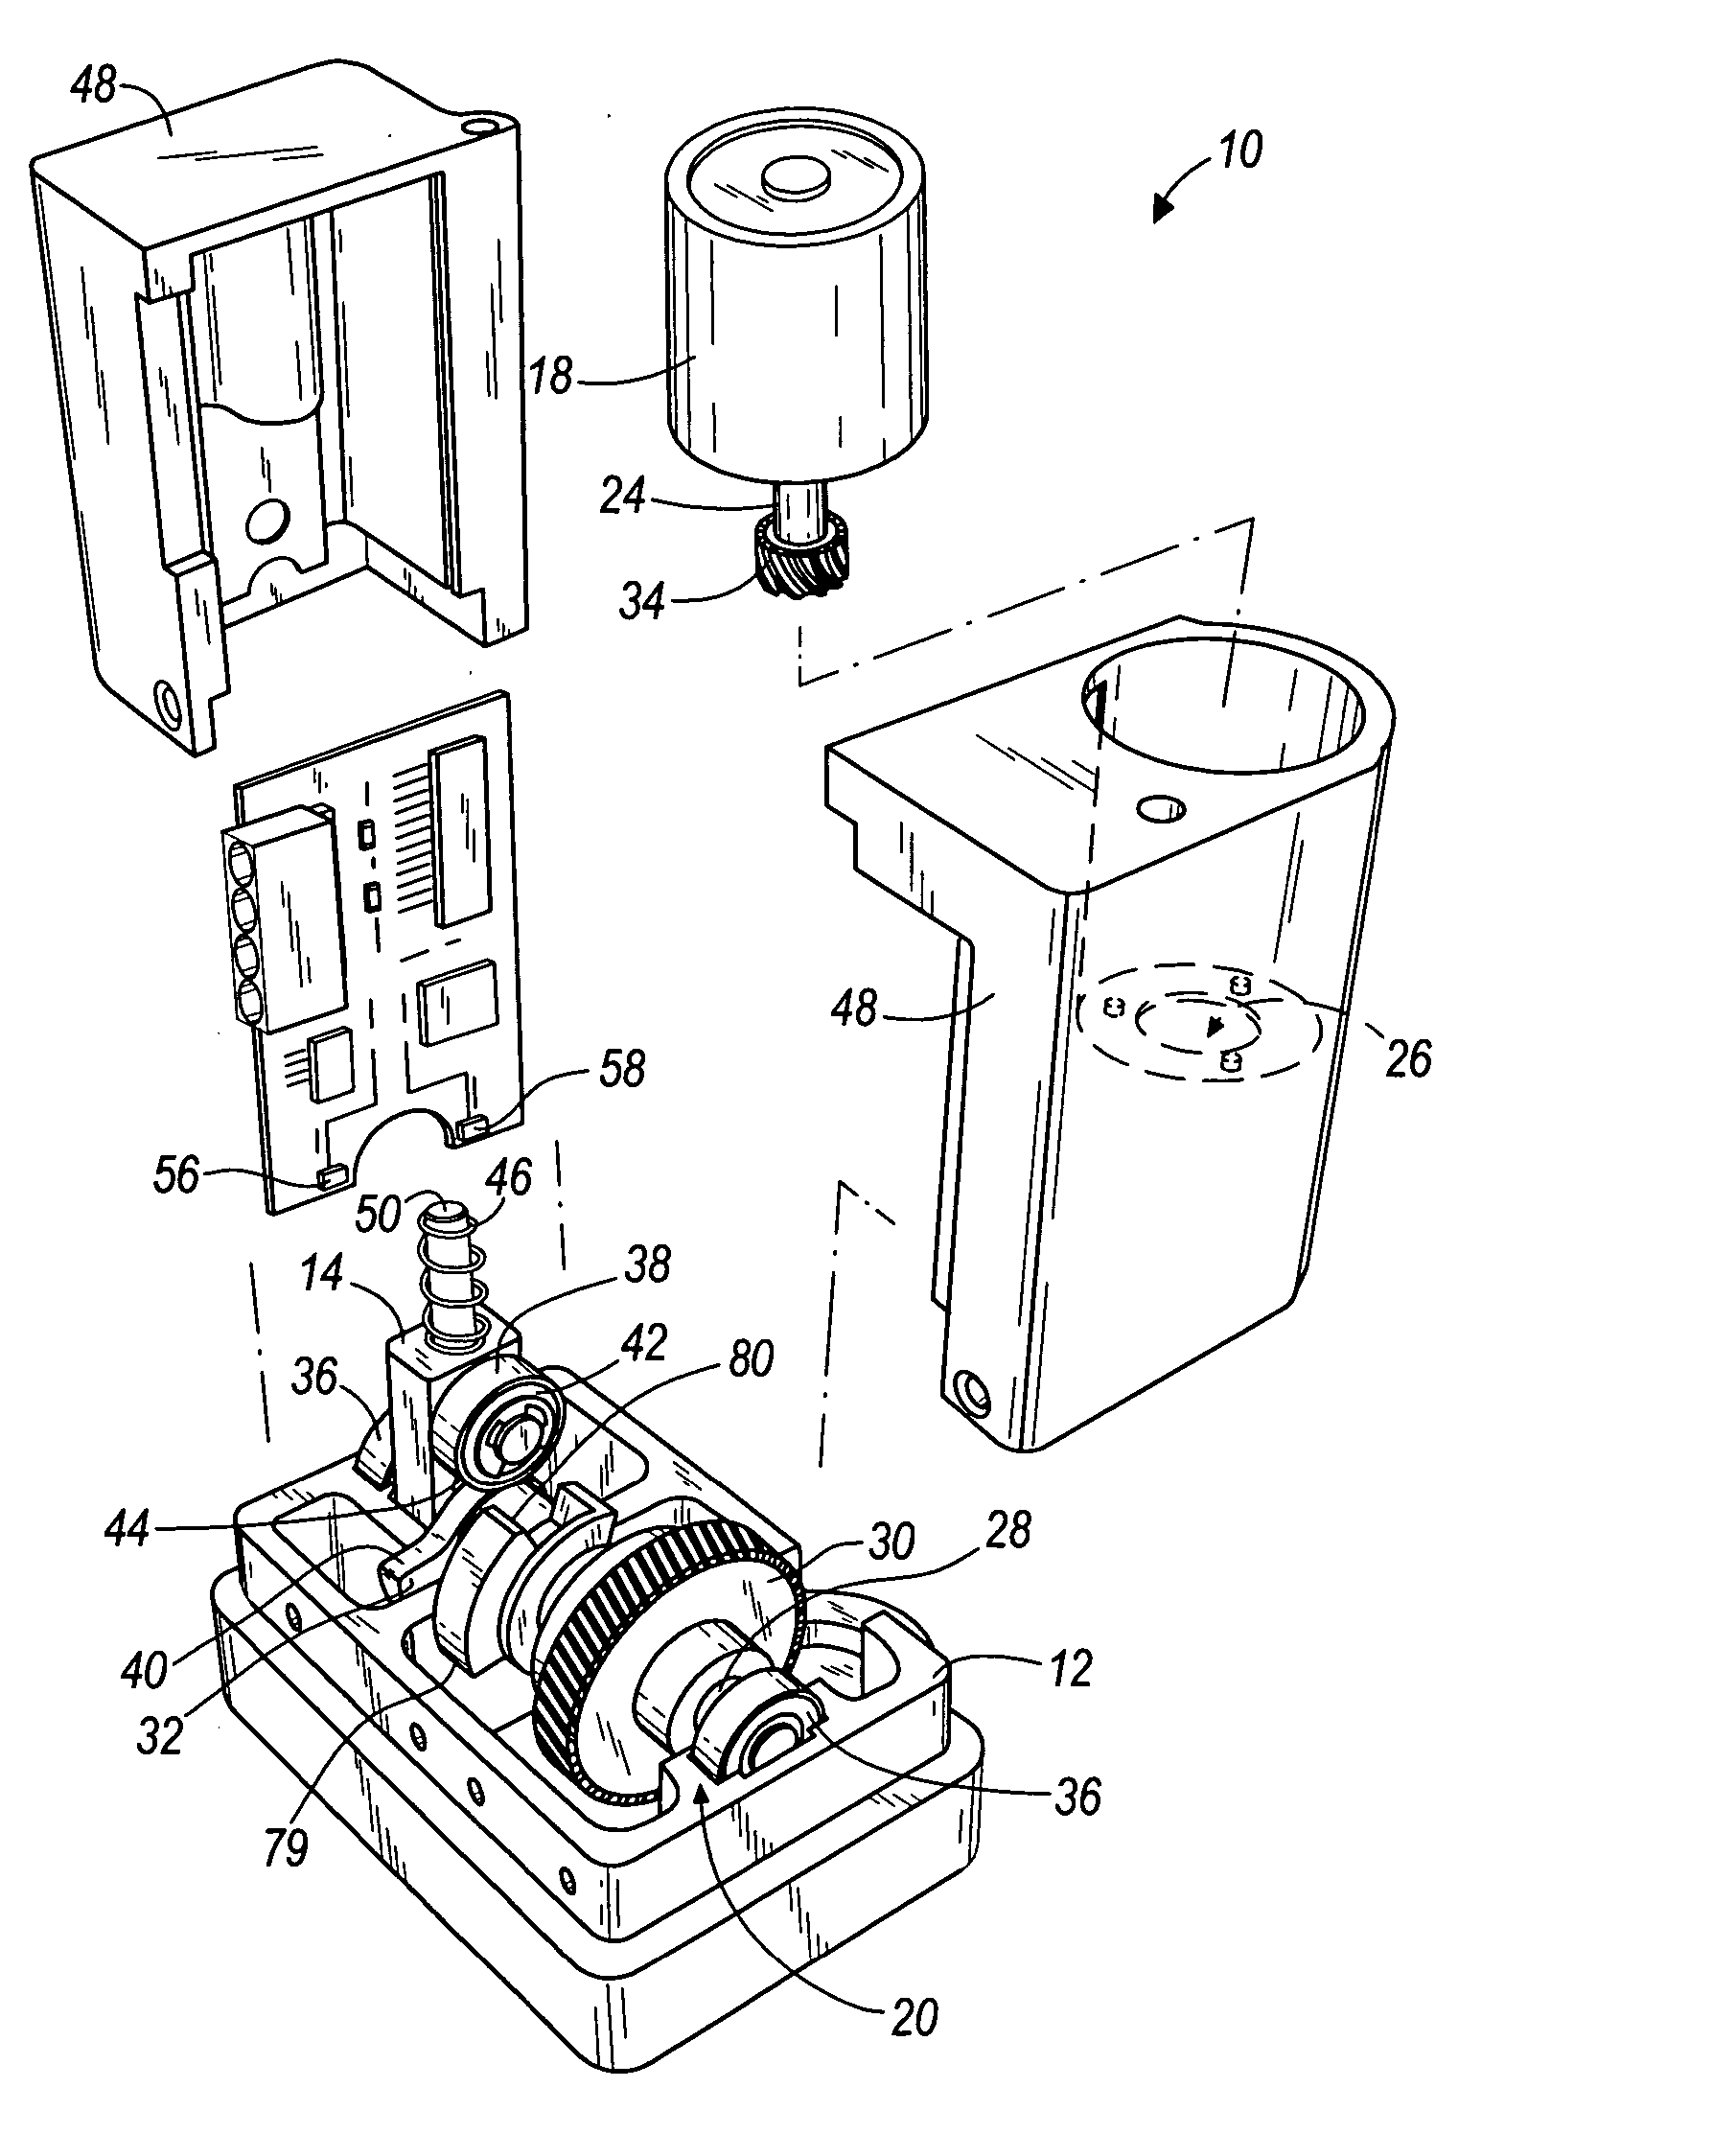 Steering column lock apparatus and method